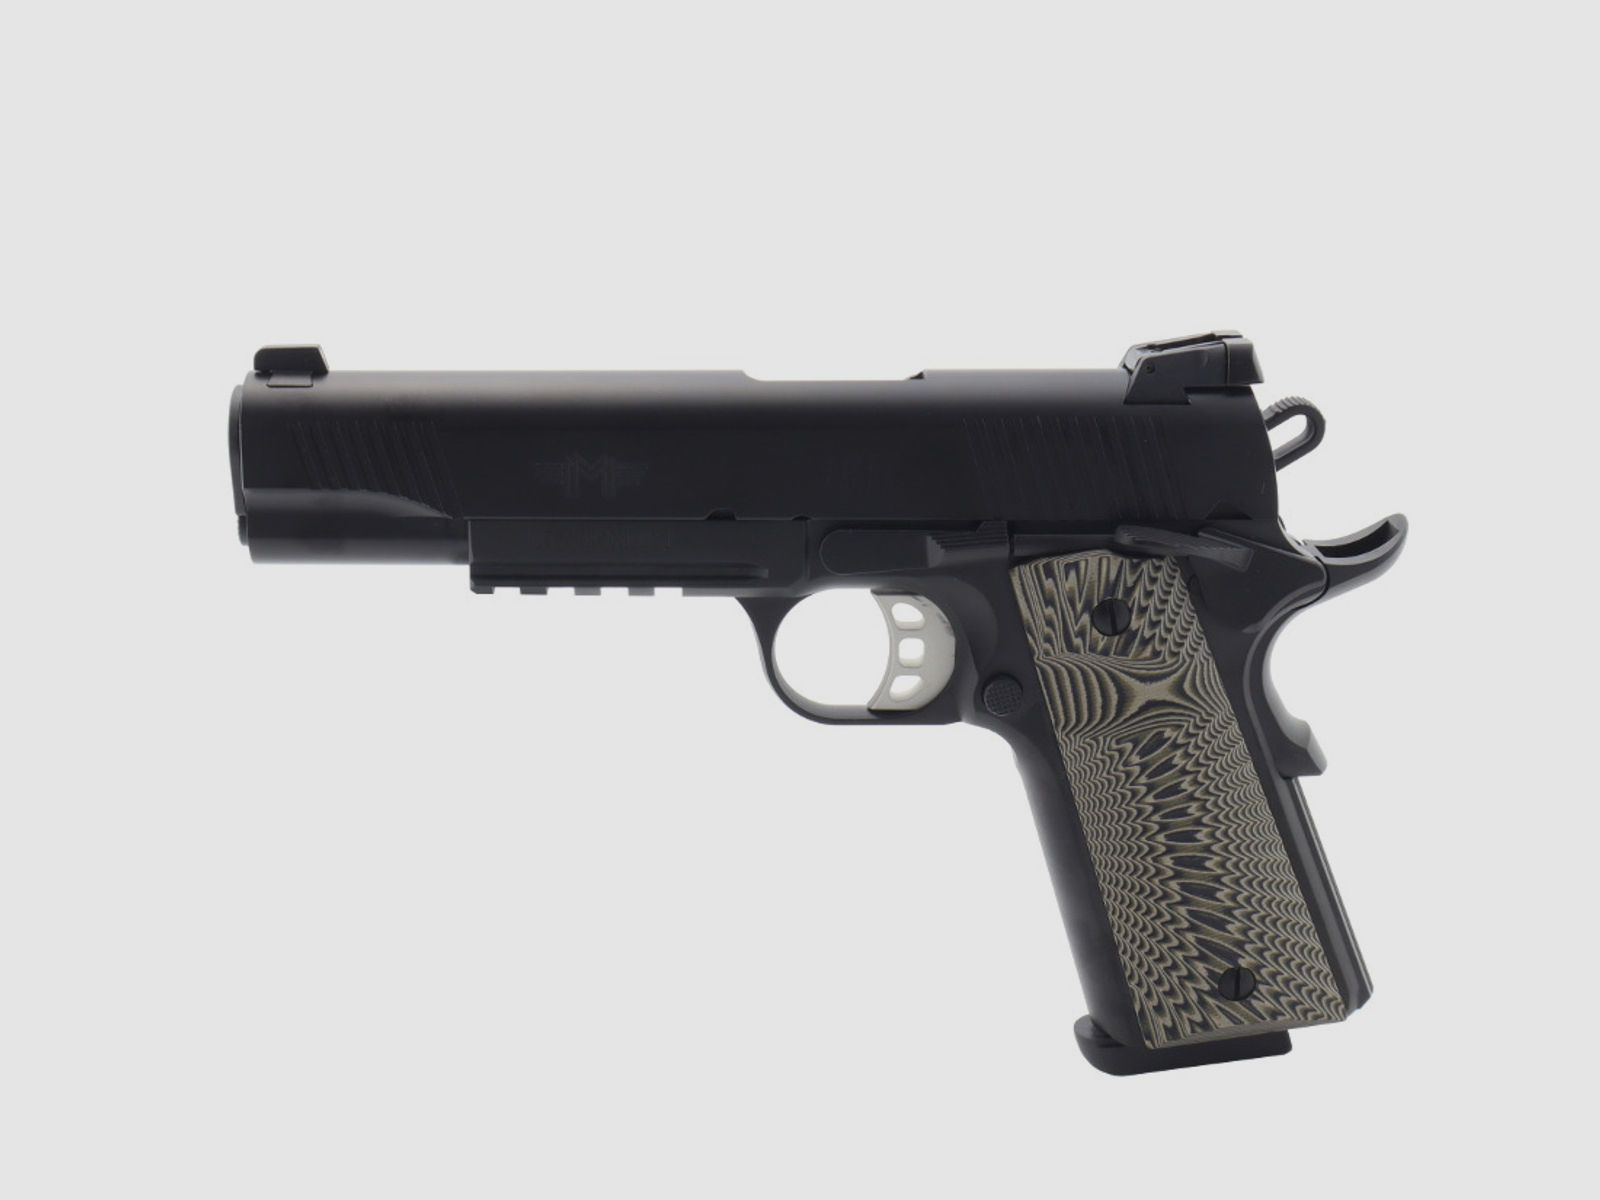  Messerschmitt Pistole ME 1911 Black 5" Kaliber: .45Auto (.45 ACP)